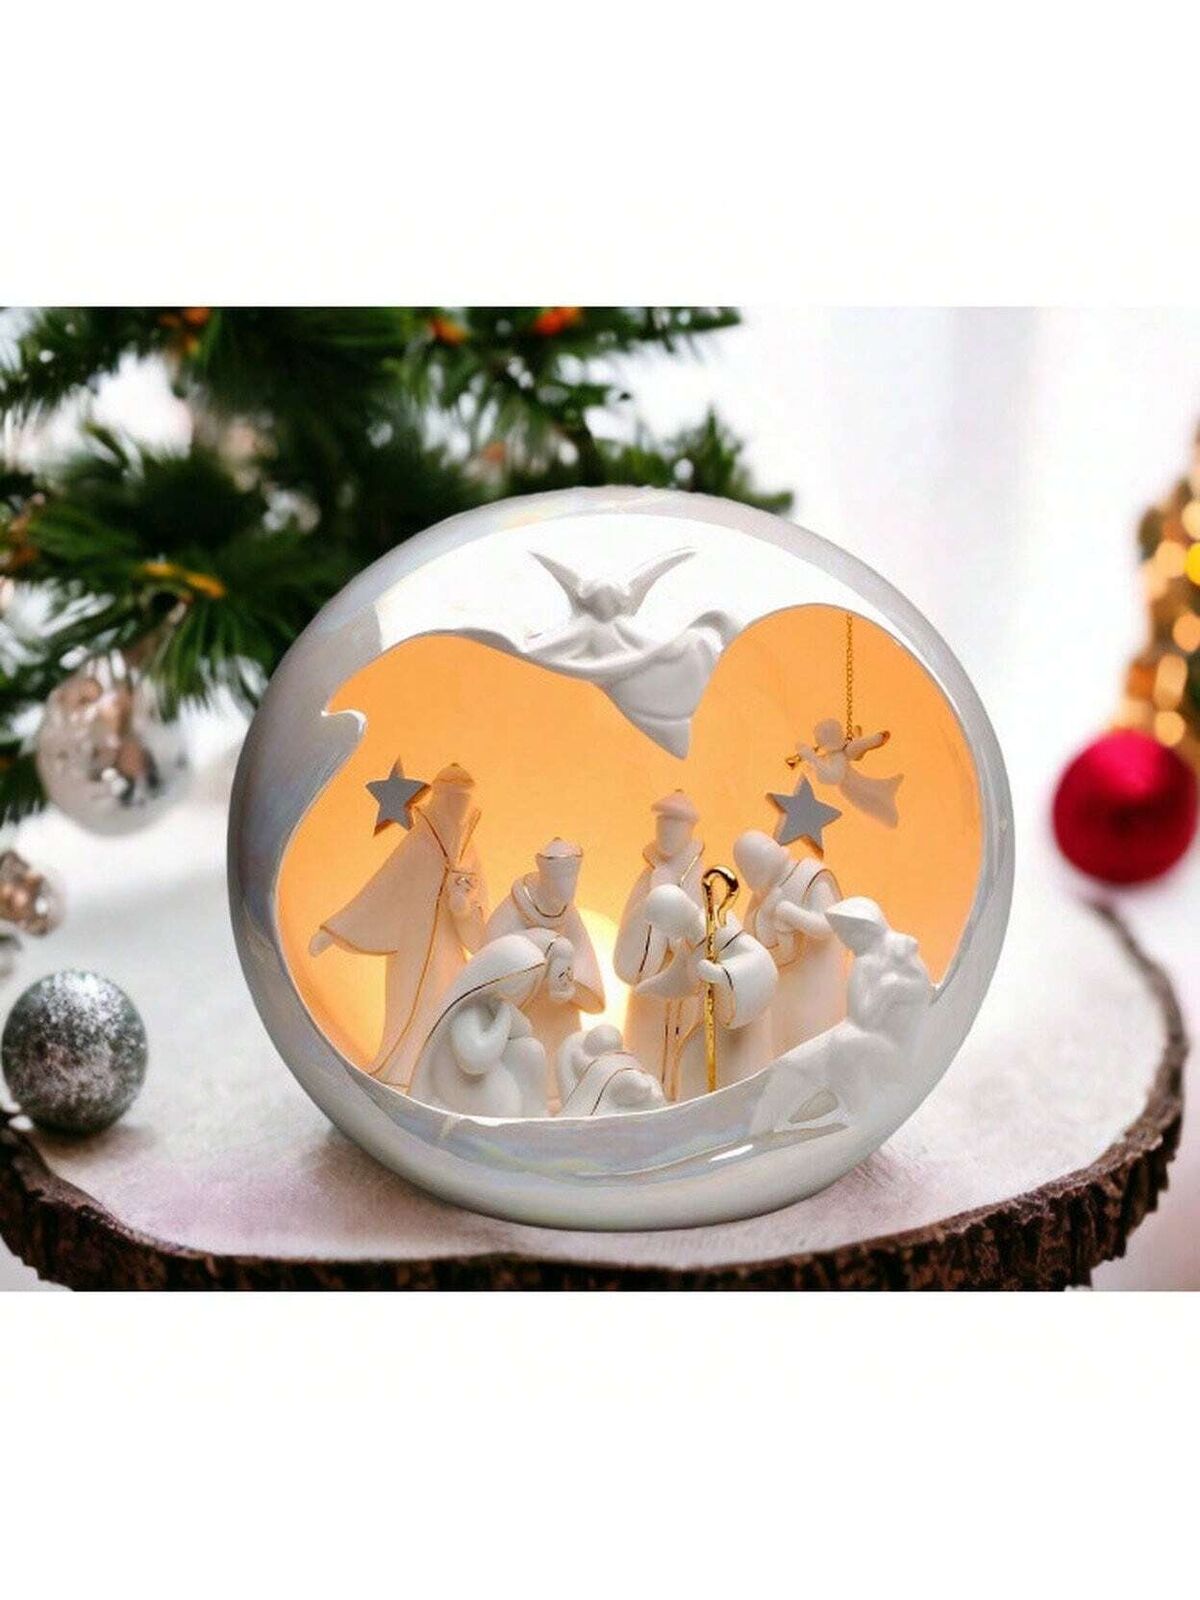 Kevinsgiftshoppe Ceramic Large Globe Nativity Scene Night Light Home Decorations